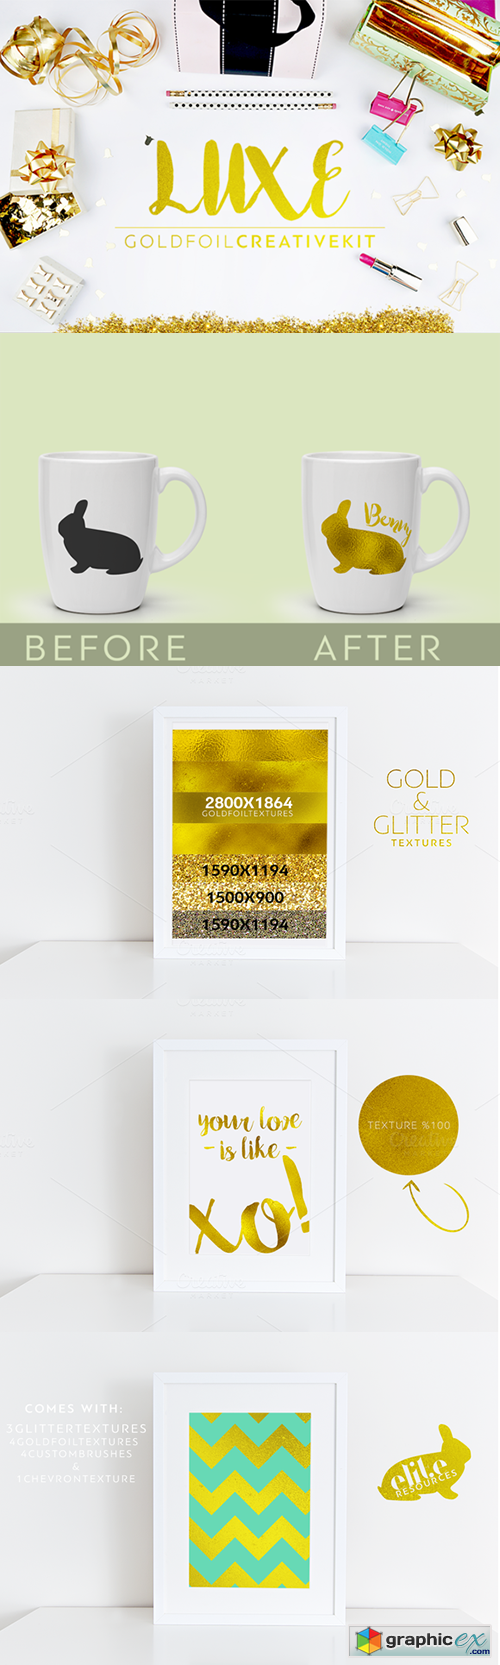 Goldfoil Photoshop Textures+Brushes